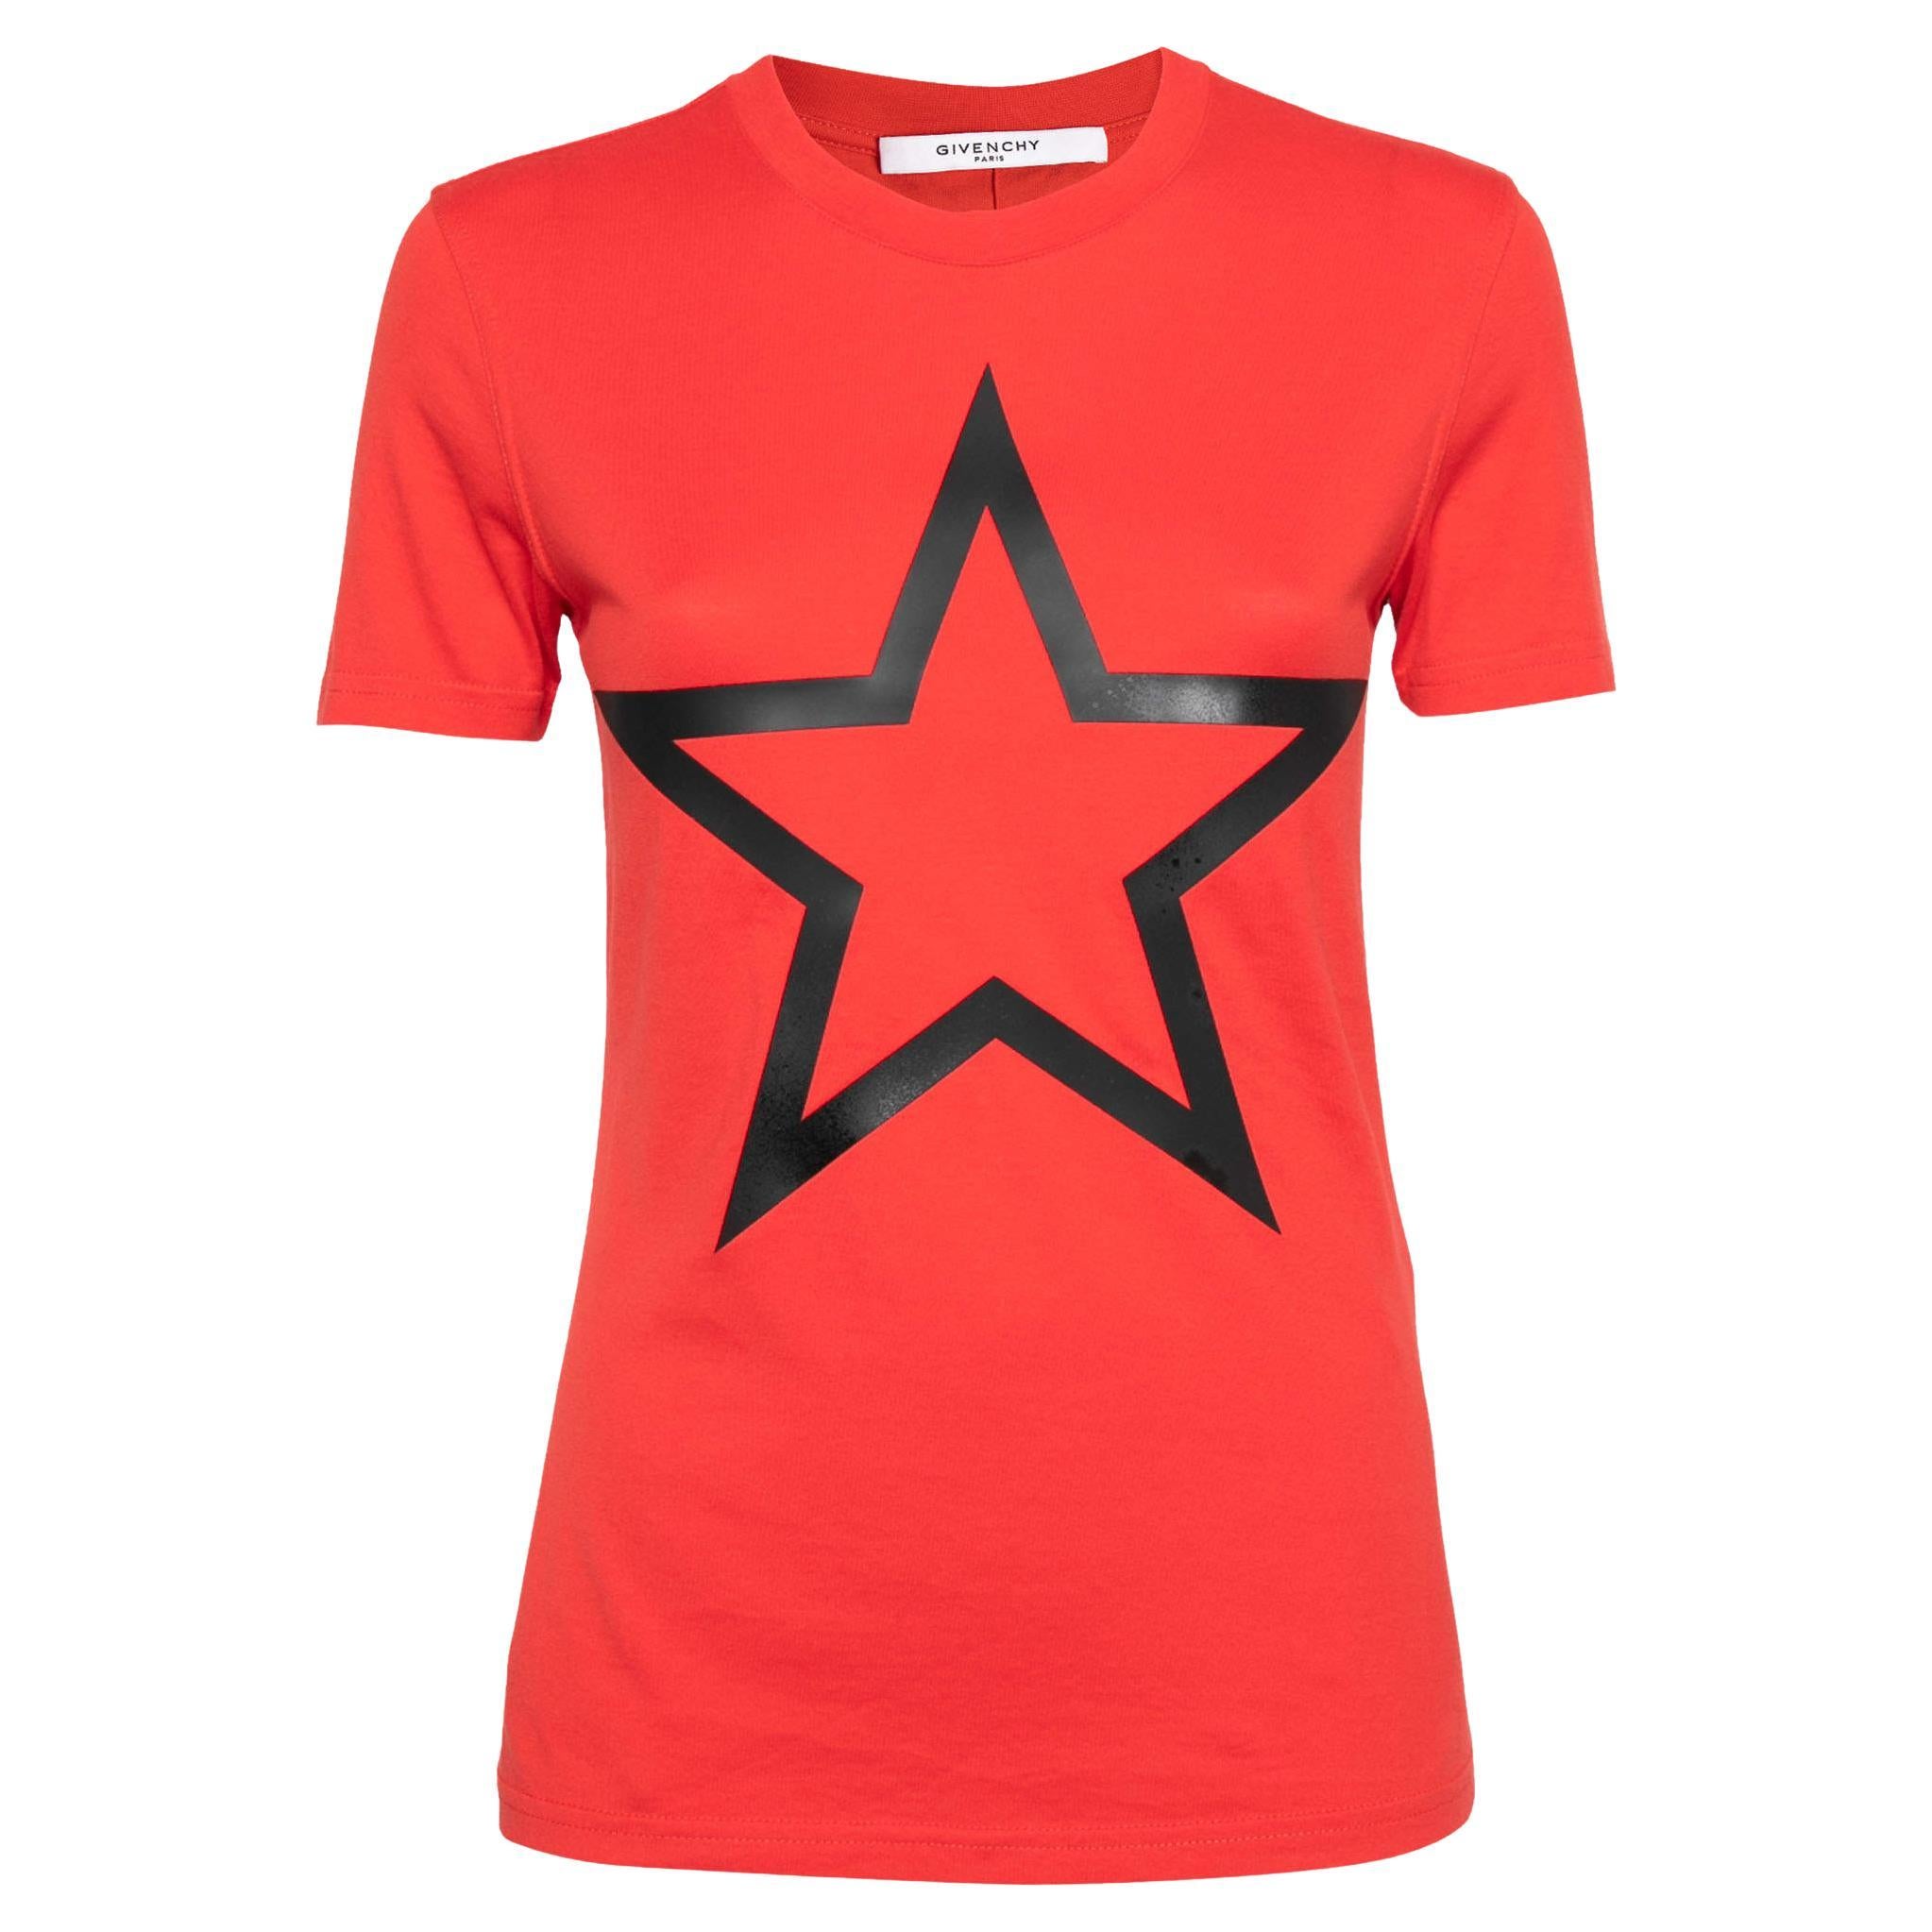 Givenchy Rotes Kurzarm-T-Shirt aus Baumwolle mit Sternapplikationen S